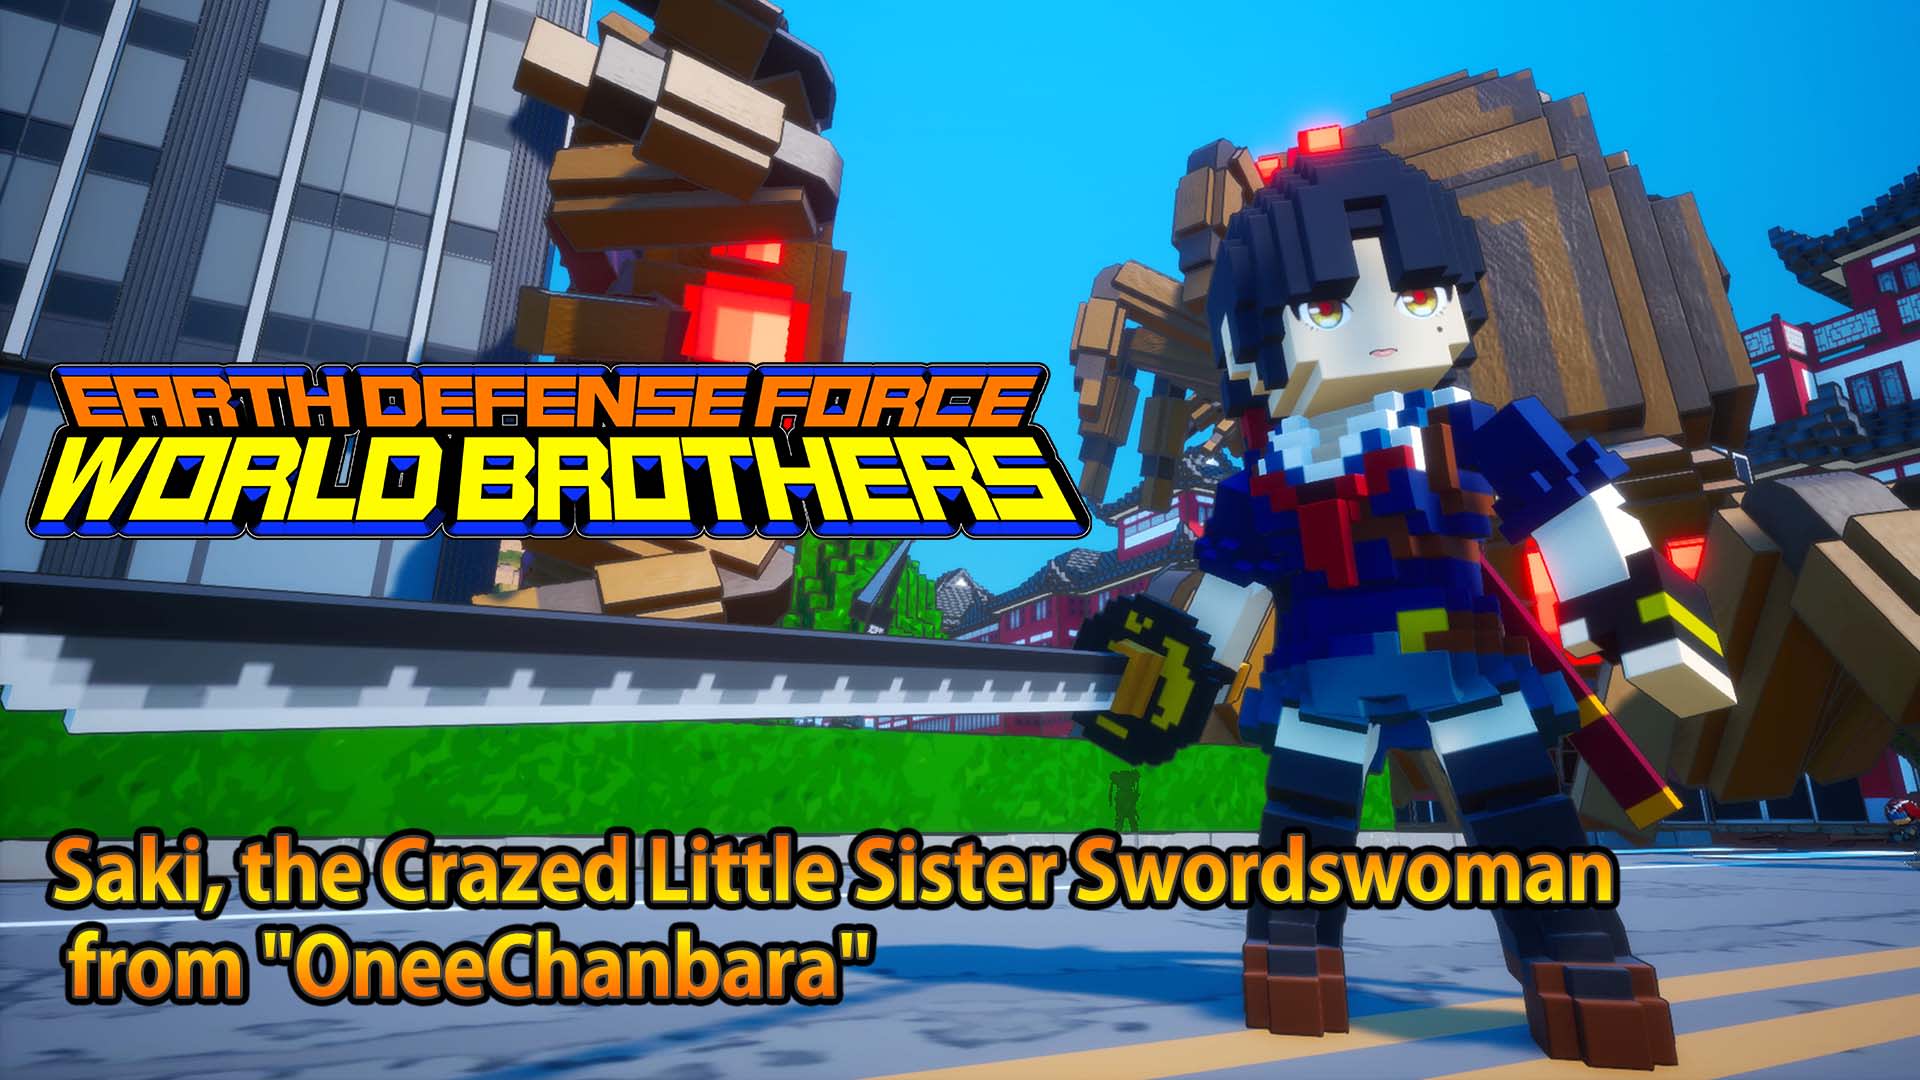 Saki, the Crazed Little Sister Swordswoman from "OneeChanbara"